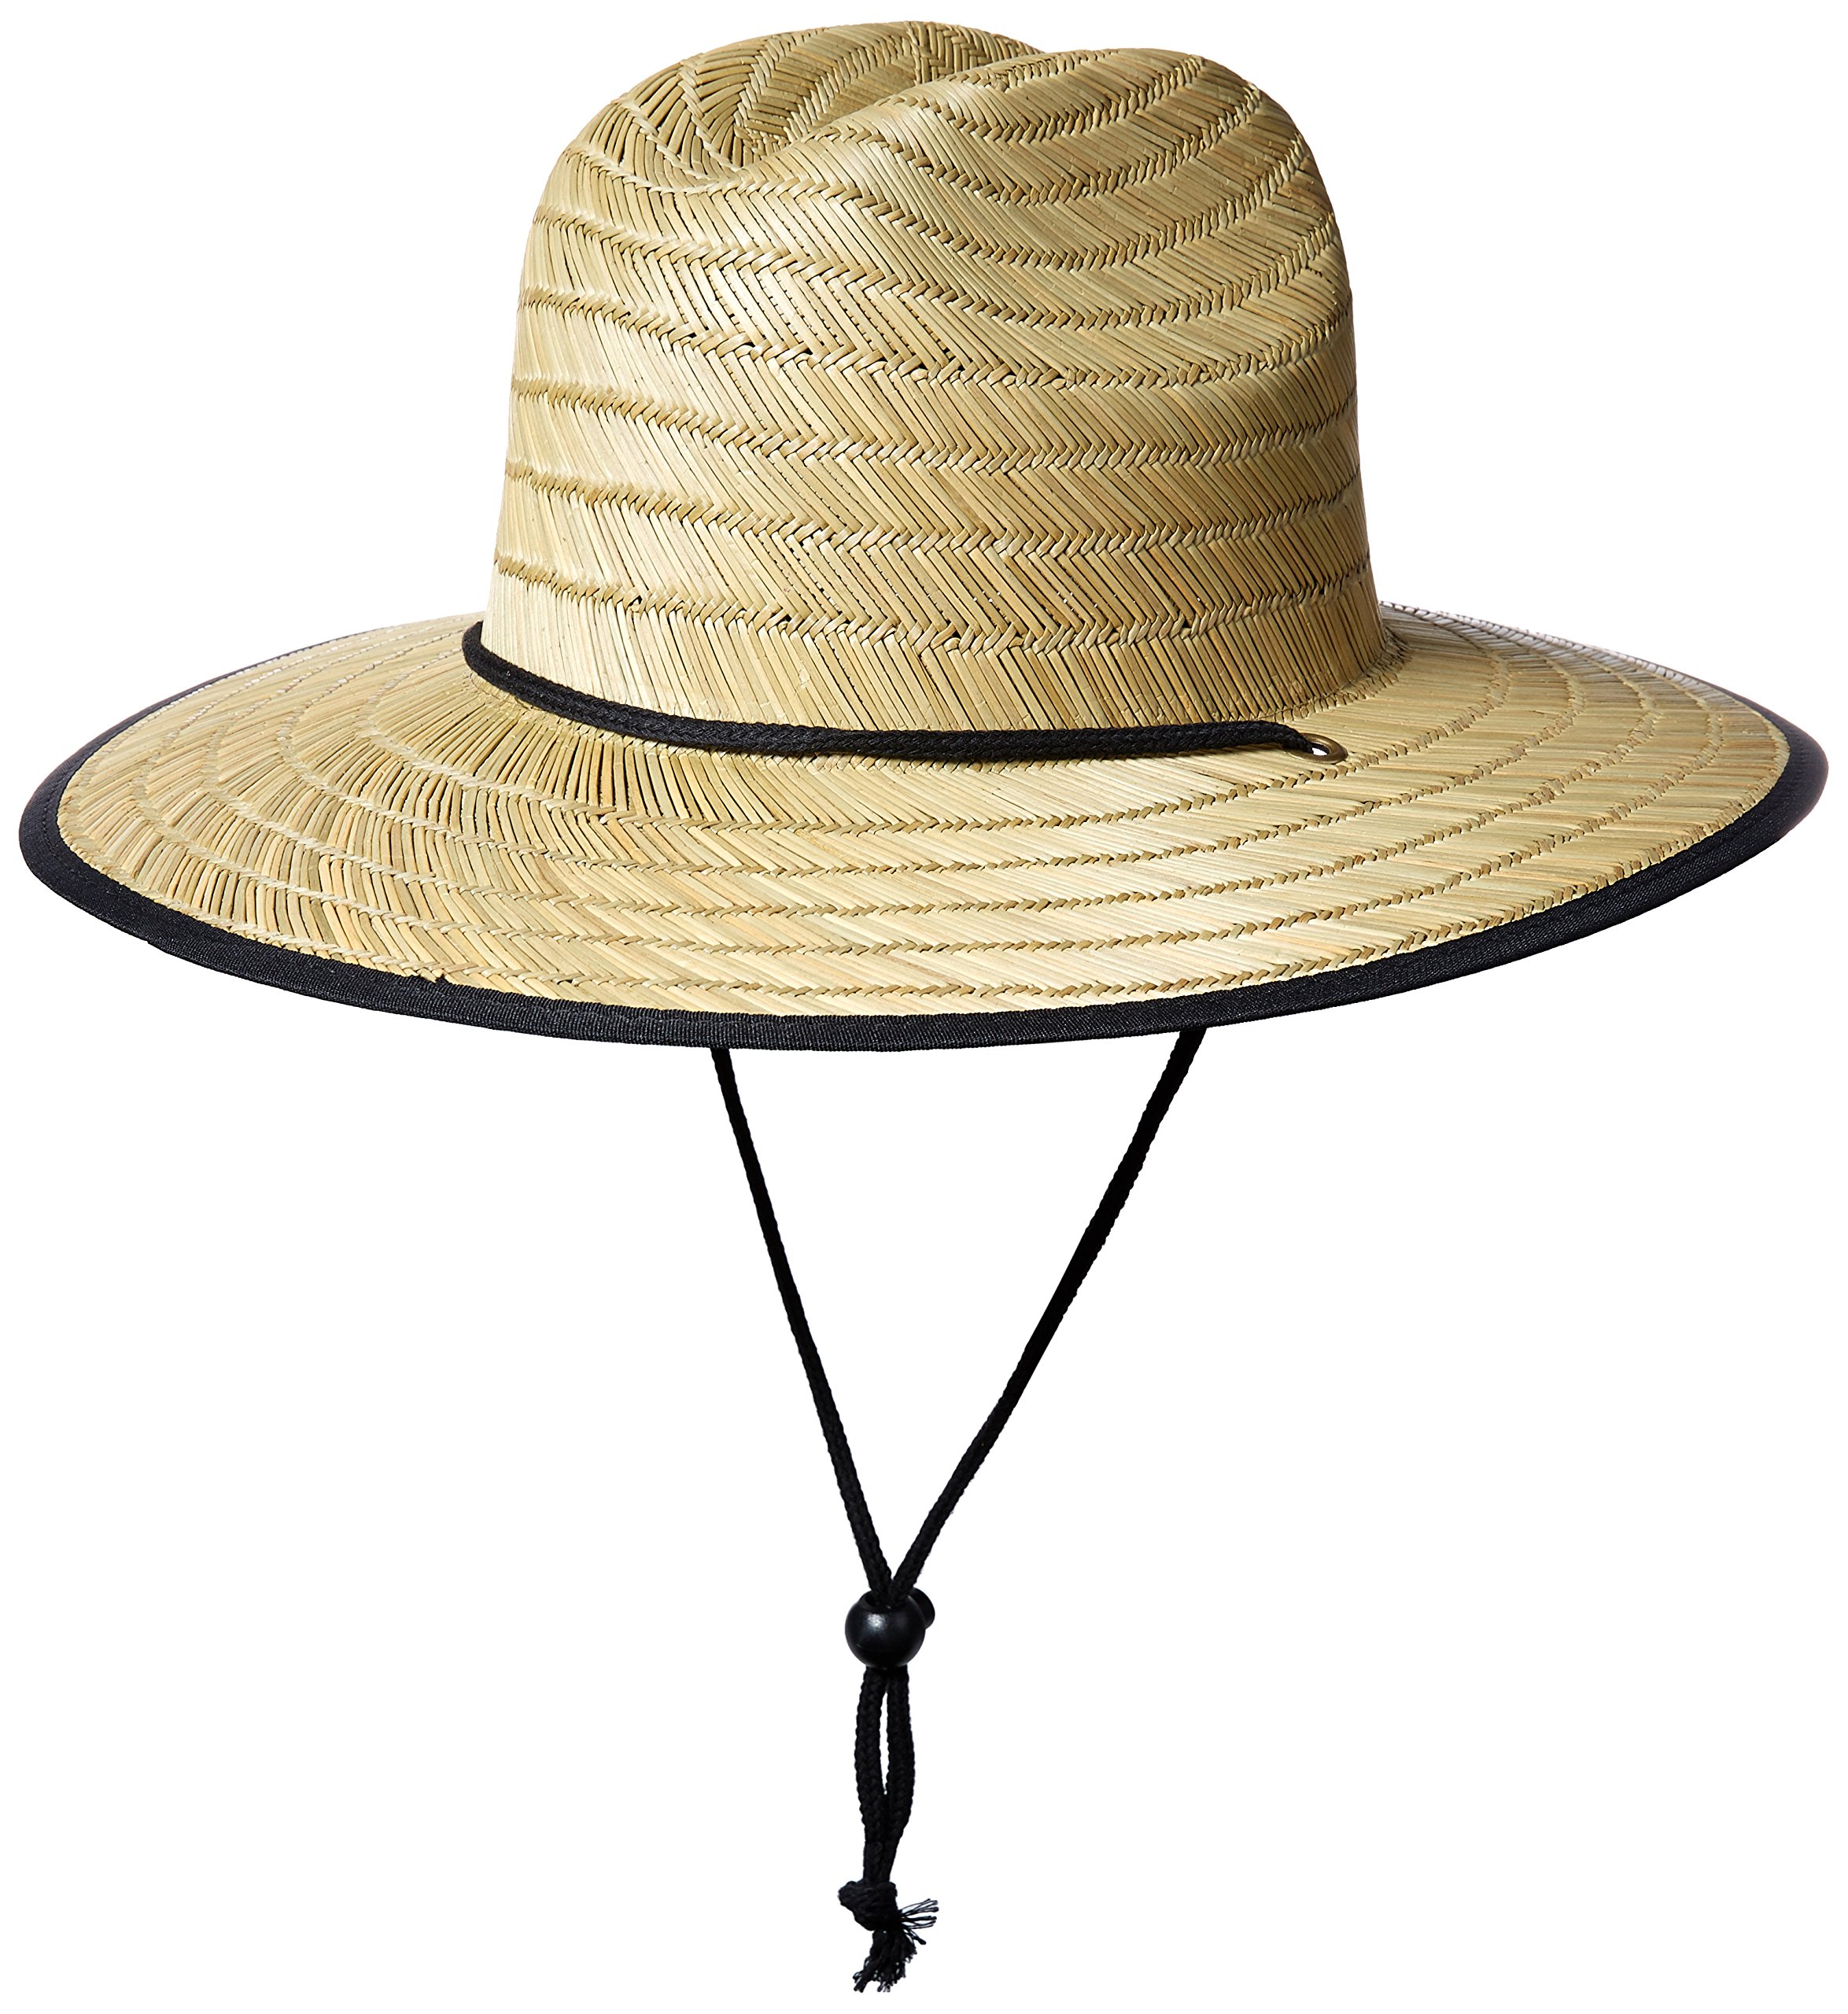 O'NEILL Men's Sonoma Print Straw Hat